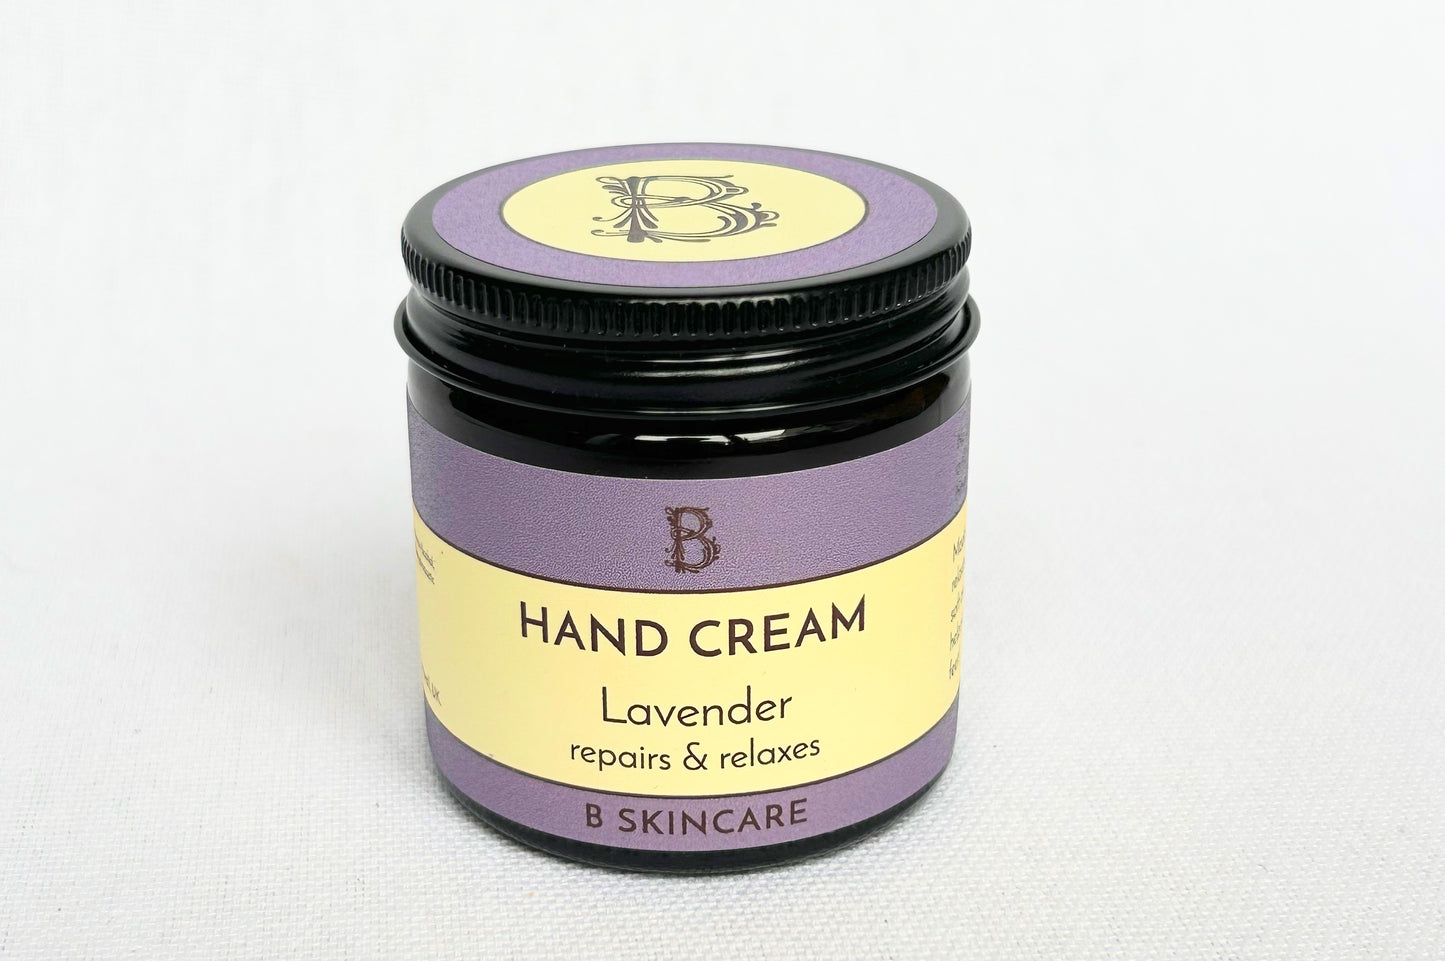 Sand & Sparkle Gift Boxes - Lavender hand cream